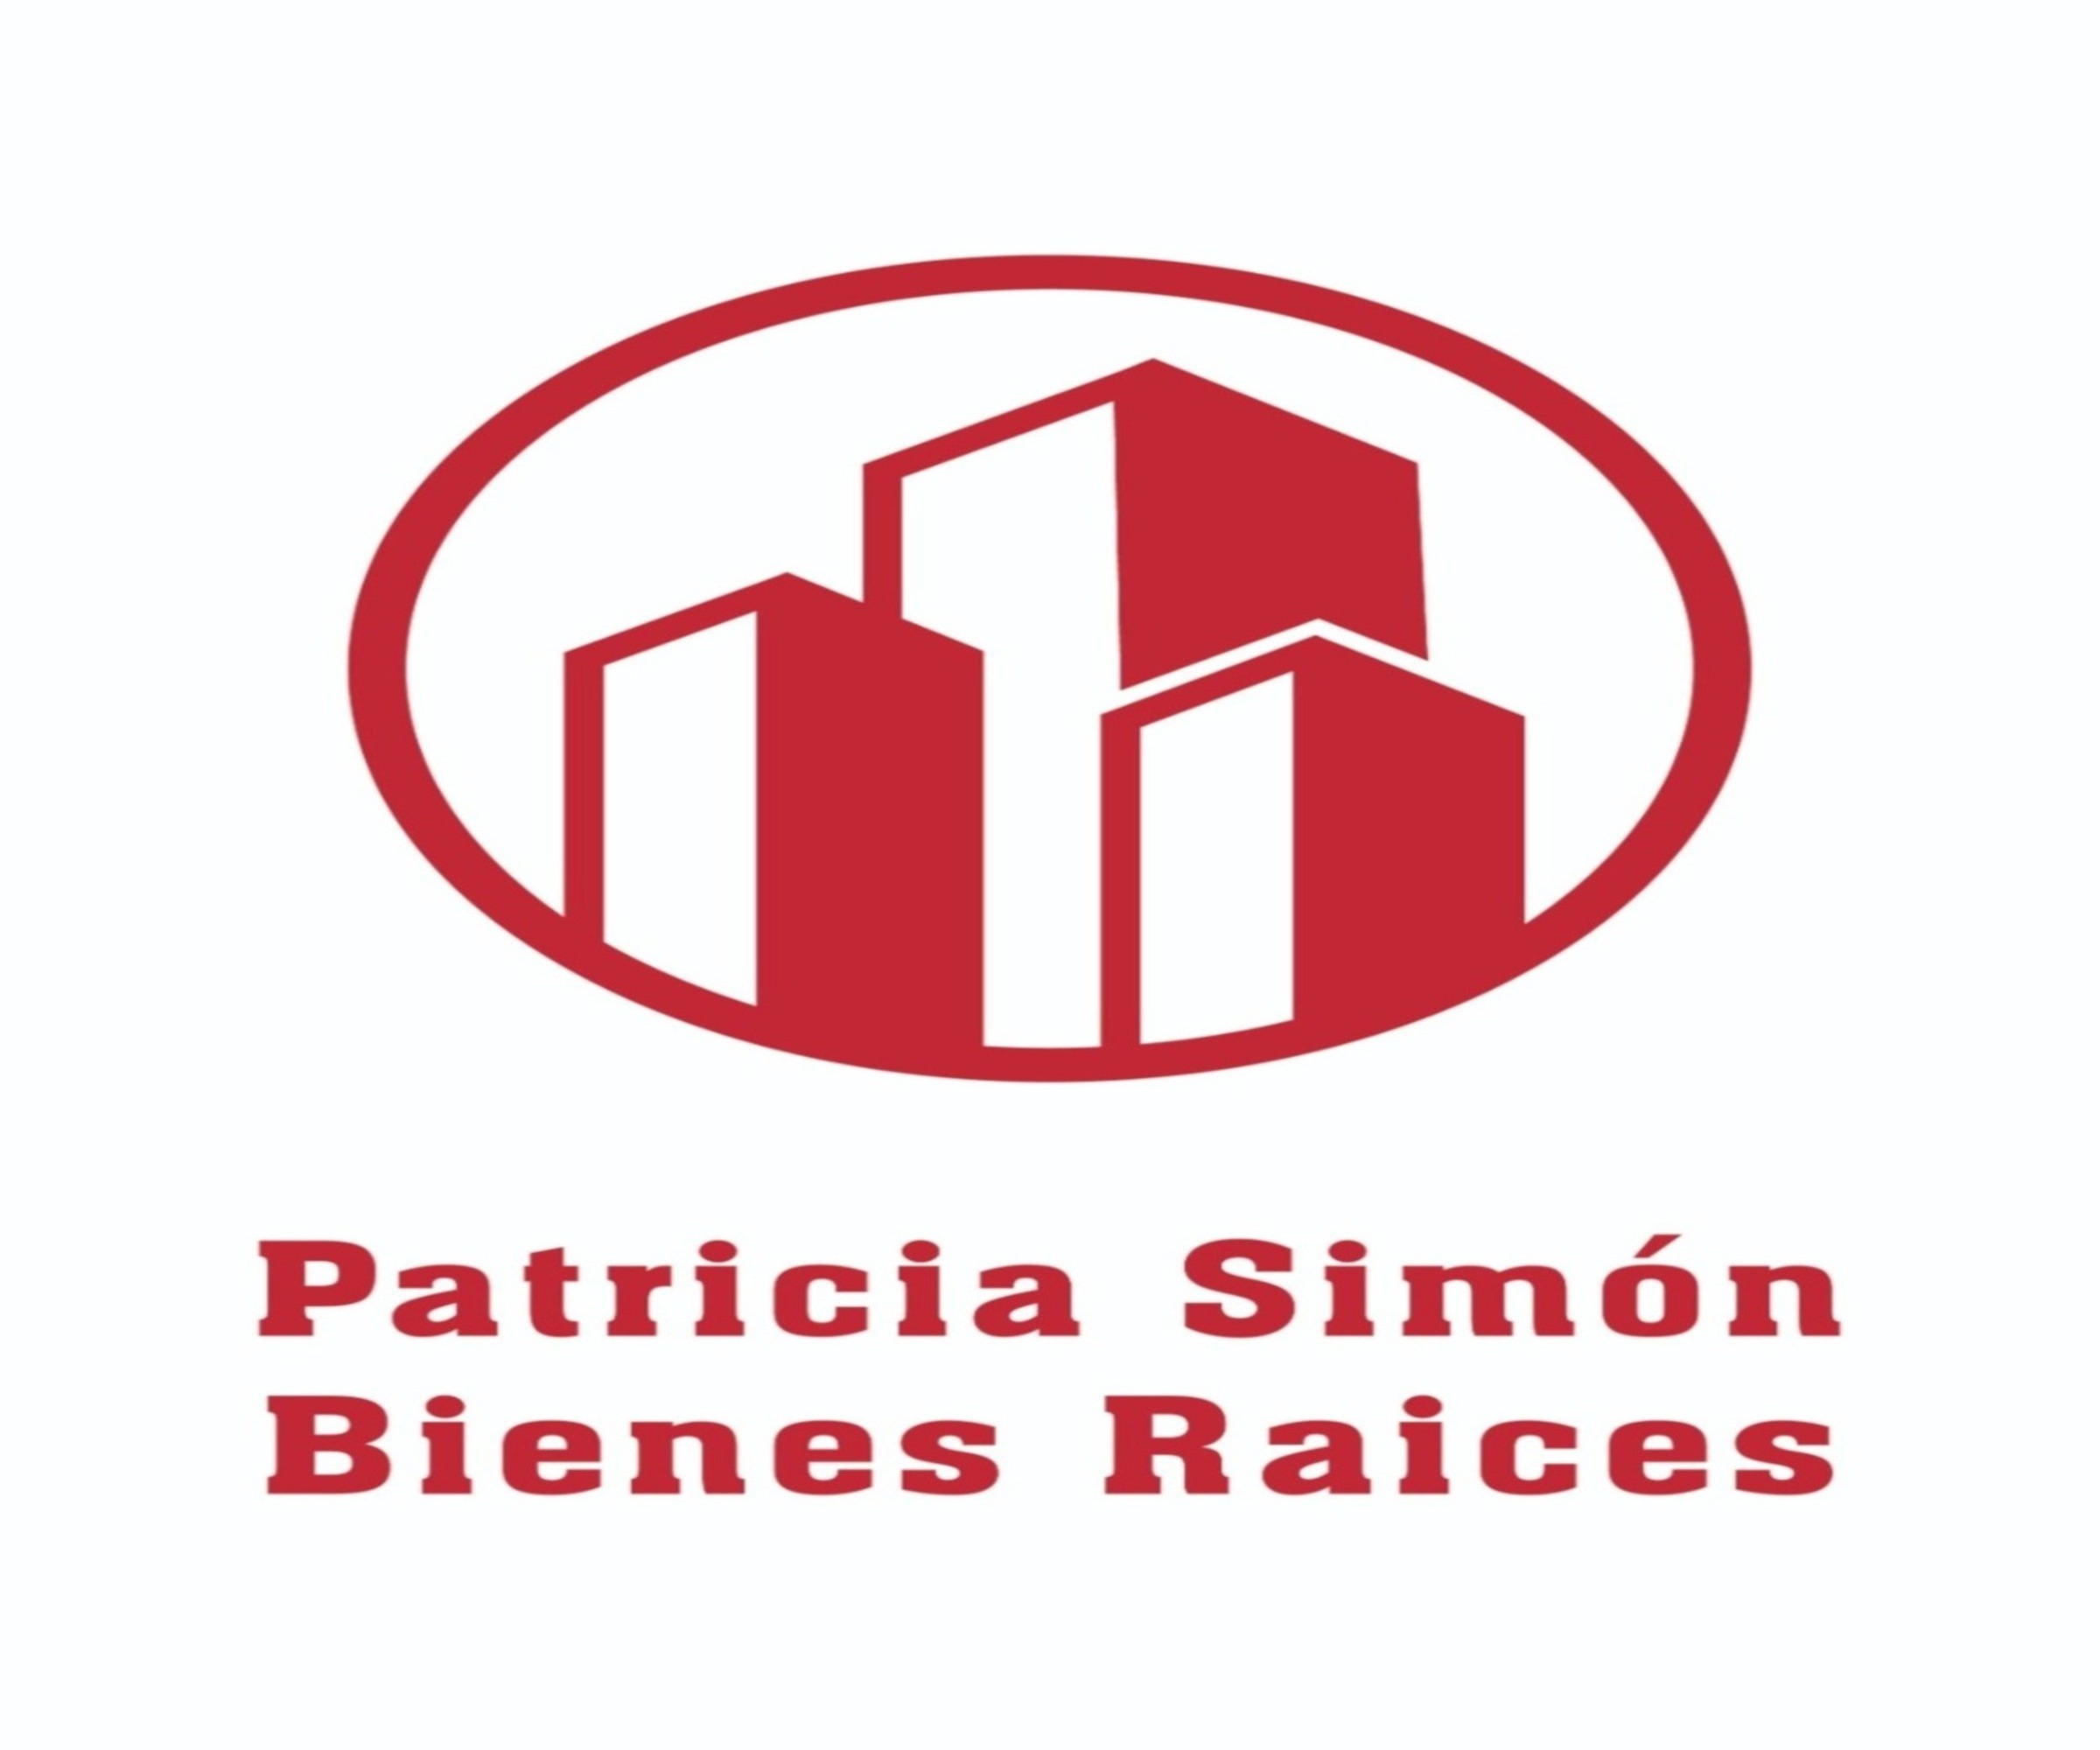 Patricia Simon Bienes Raices